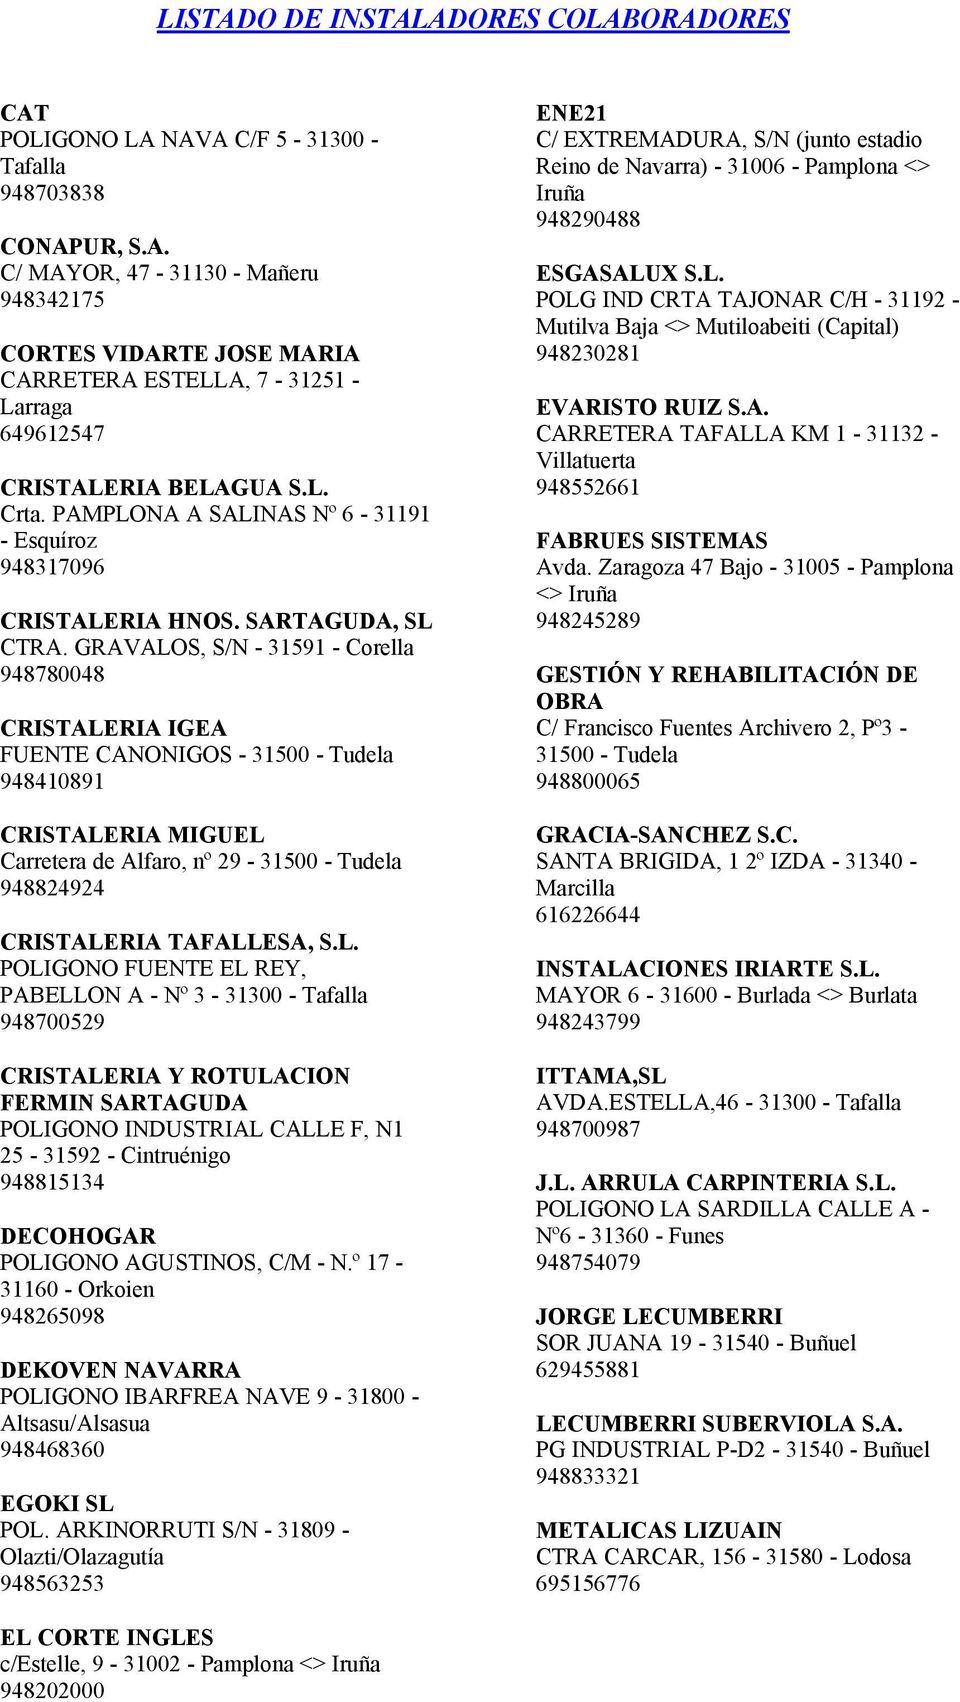 GRAVALOS, S/N - 31591 - Corella 948780048 CRISTALERIA IGEA FUENTE CANONIGOS - 31500 - Tudela 948410891 CRISTALERIA MIGUEL Carretera de Alfaro, nº 29-31500 - Tudela 948824924 CRISTALERIA TAFALLESA, S.